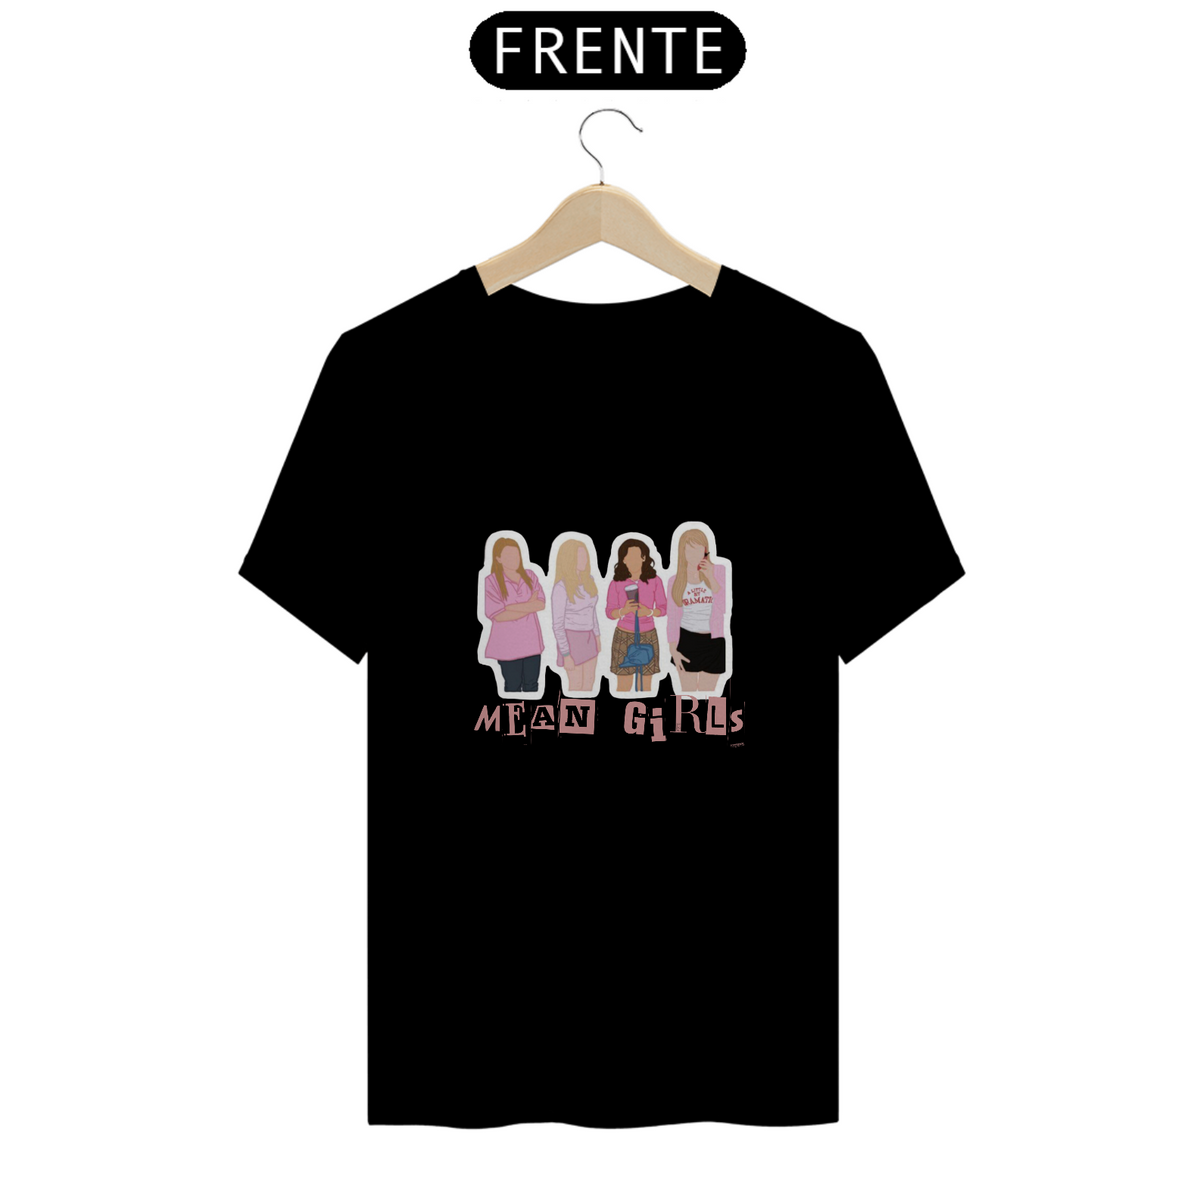 Nome do produto: Camiseta Meninas Malvadas | Mean Girls